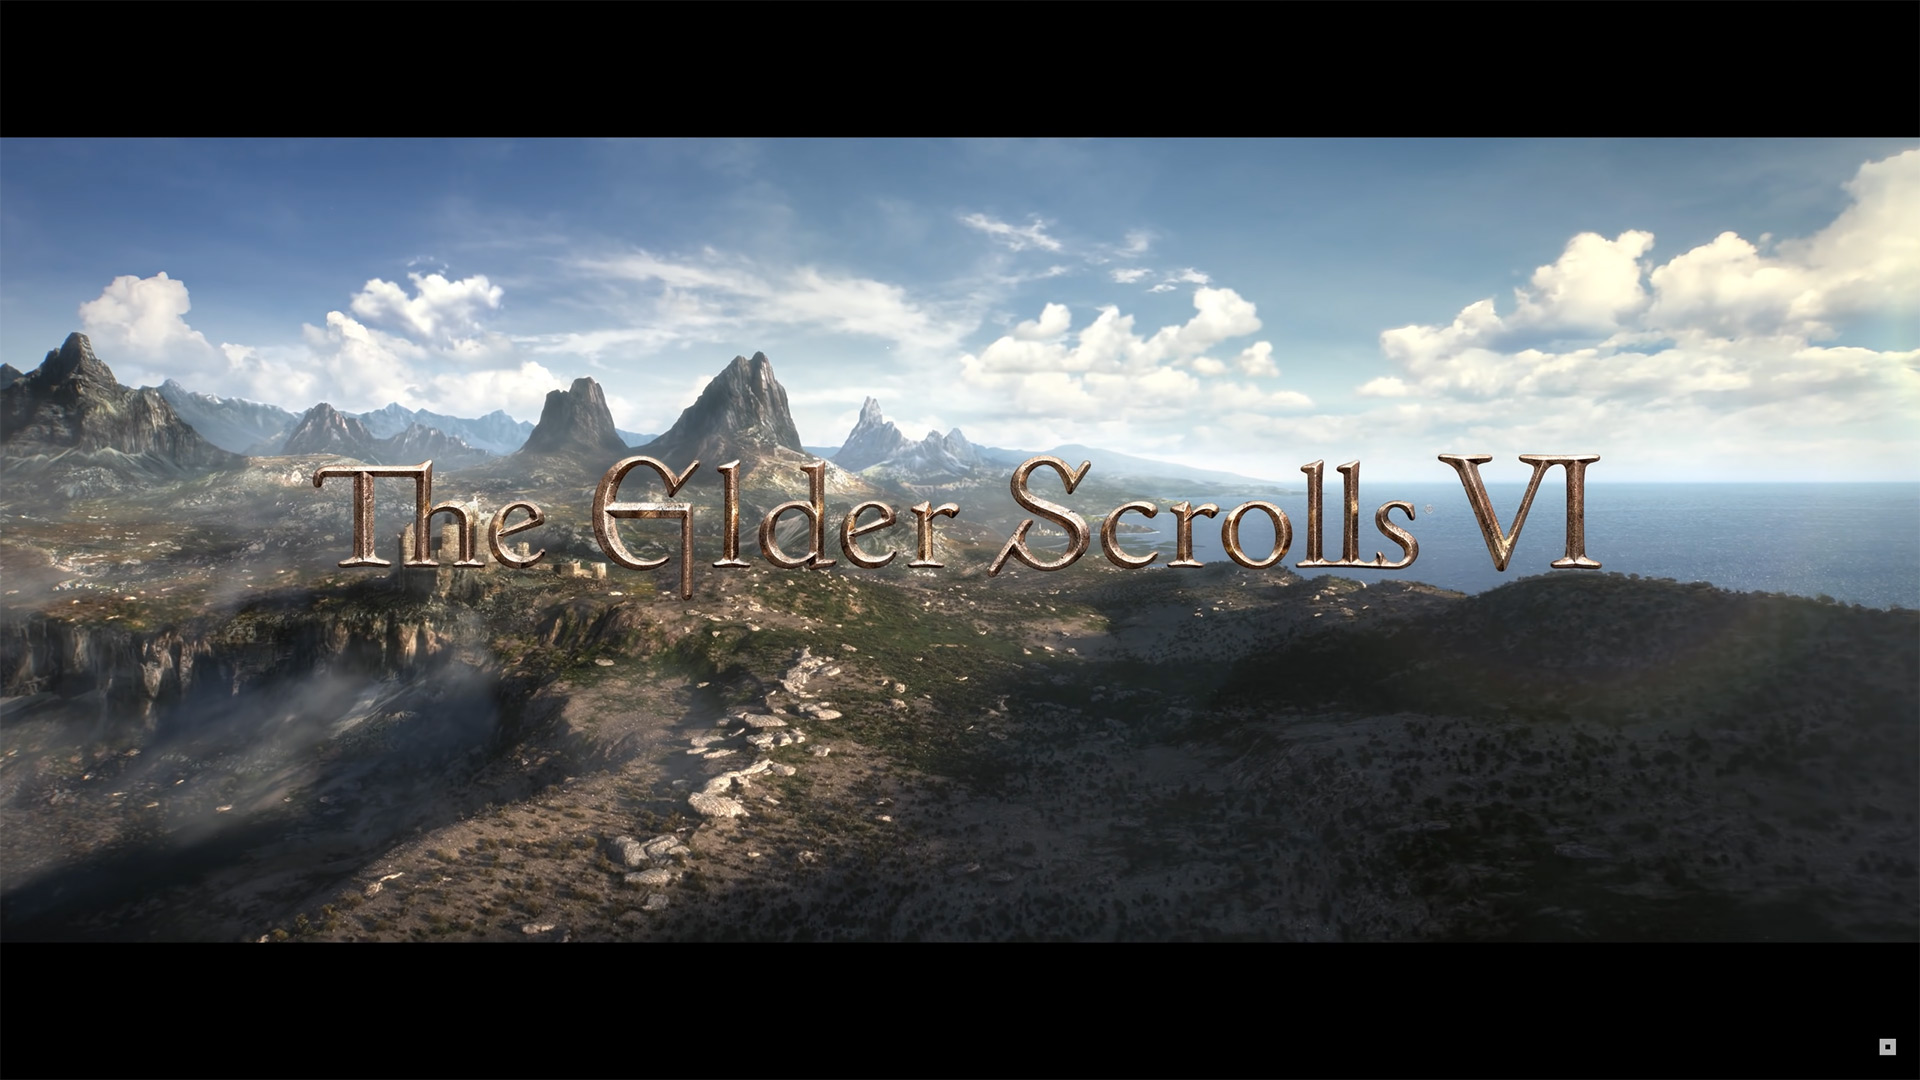 The Elder Scrolls VI isn't arriving anytime soon